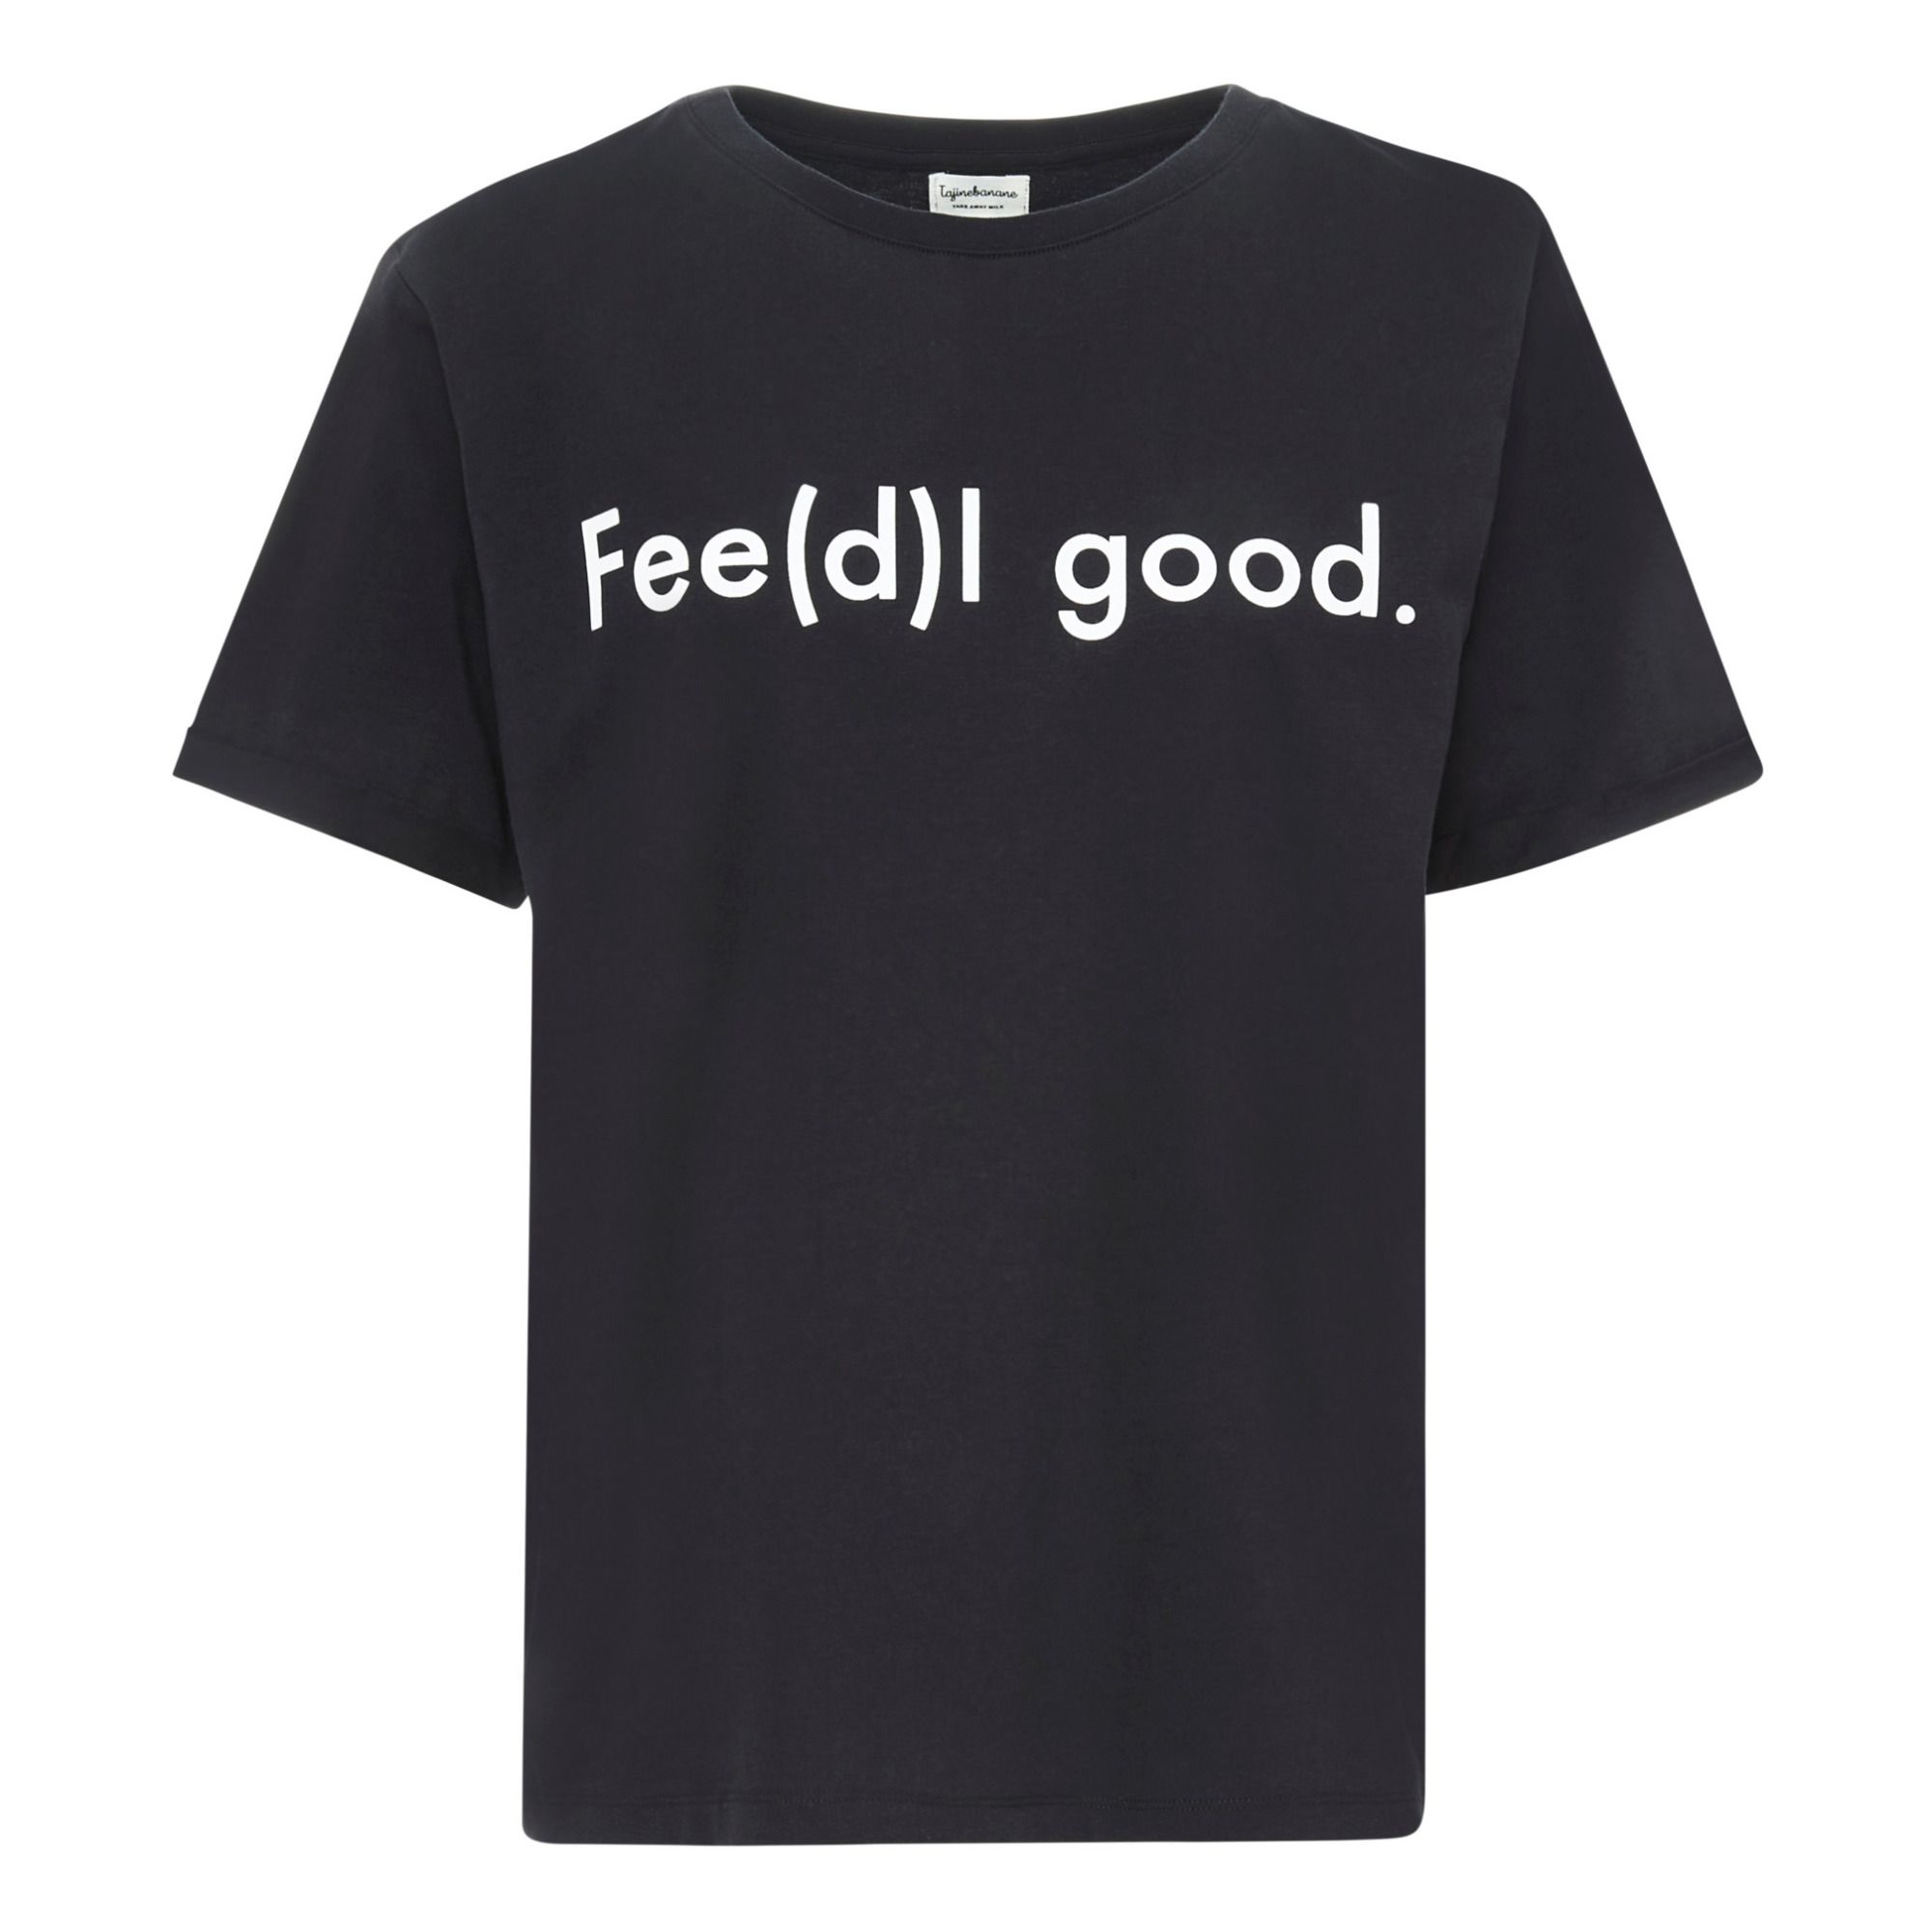 Tajinebanane - T-Shirt d'allaitement Feel good - Femme - Noir